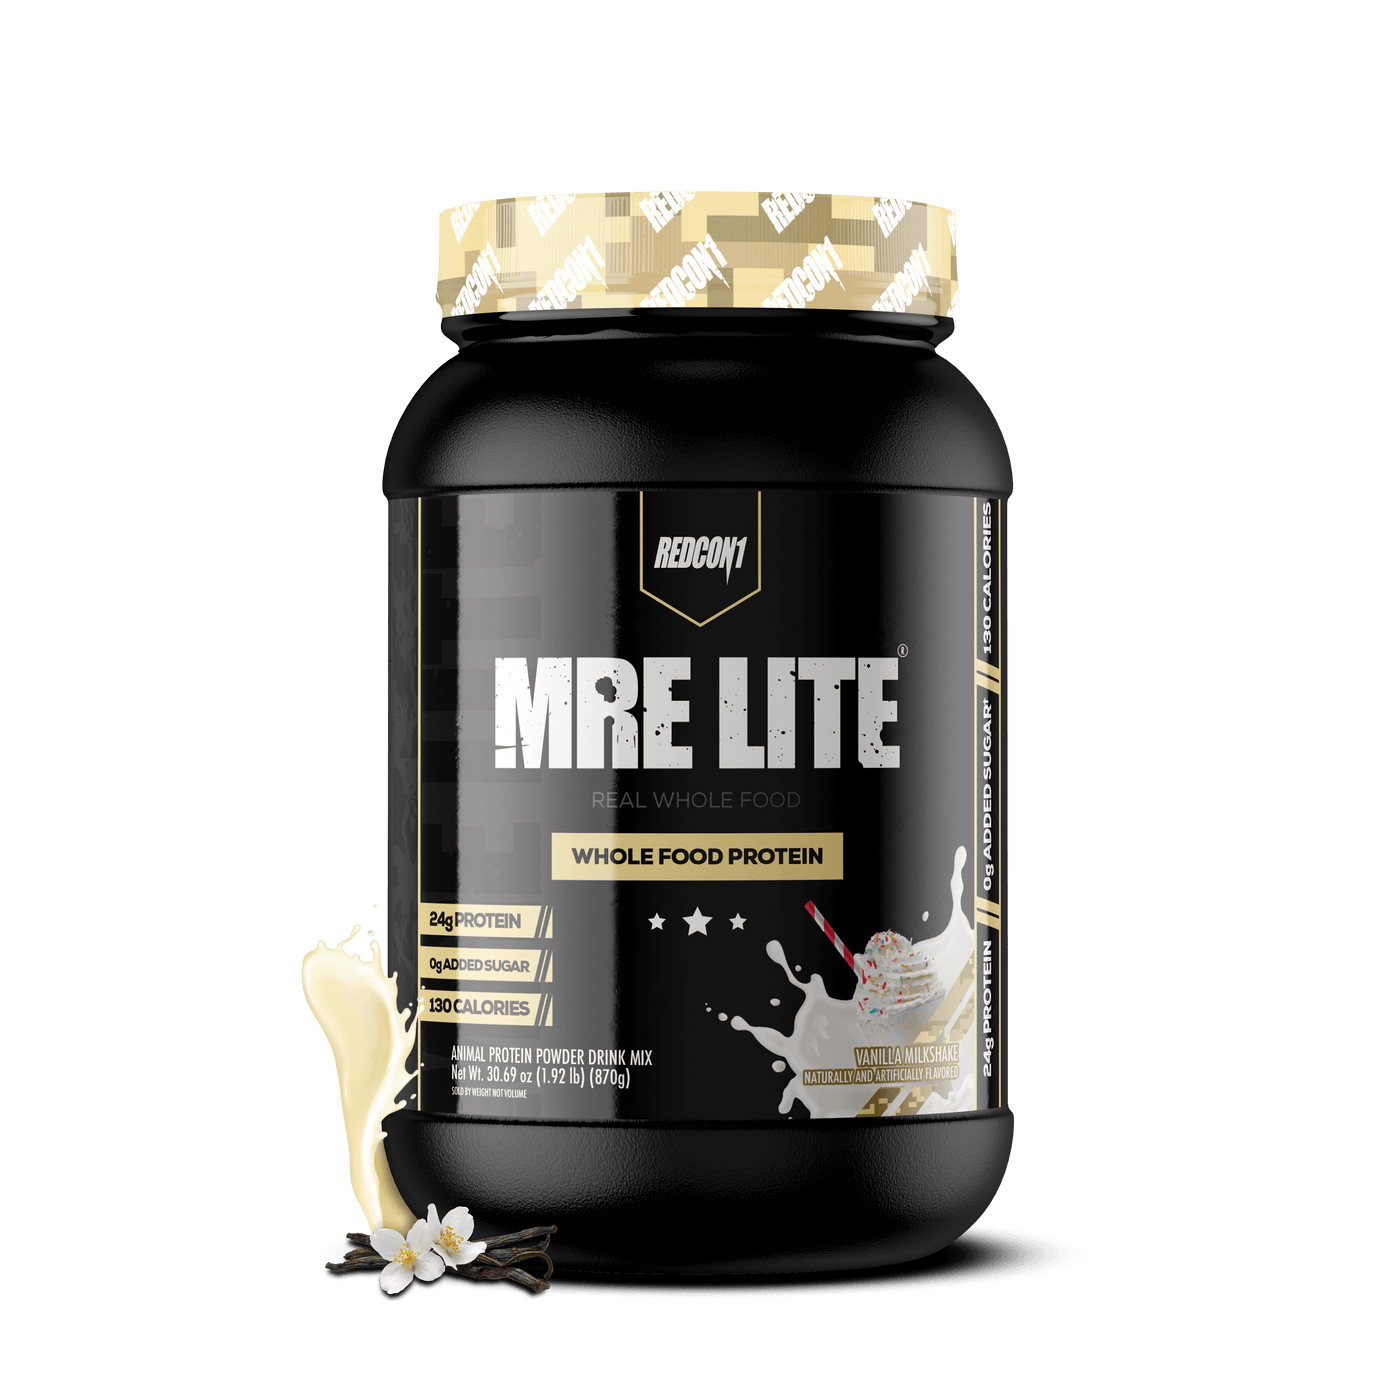 MRE LITE - 低炭水化物ミールリプレイスメント